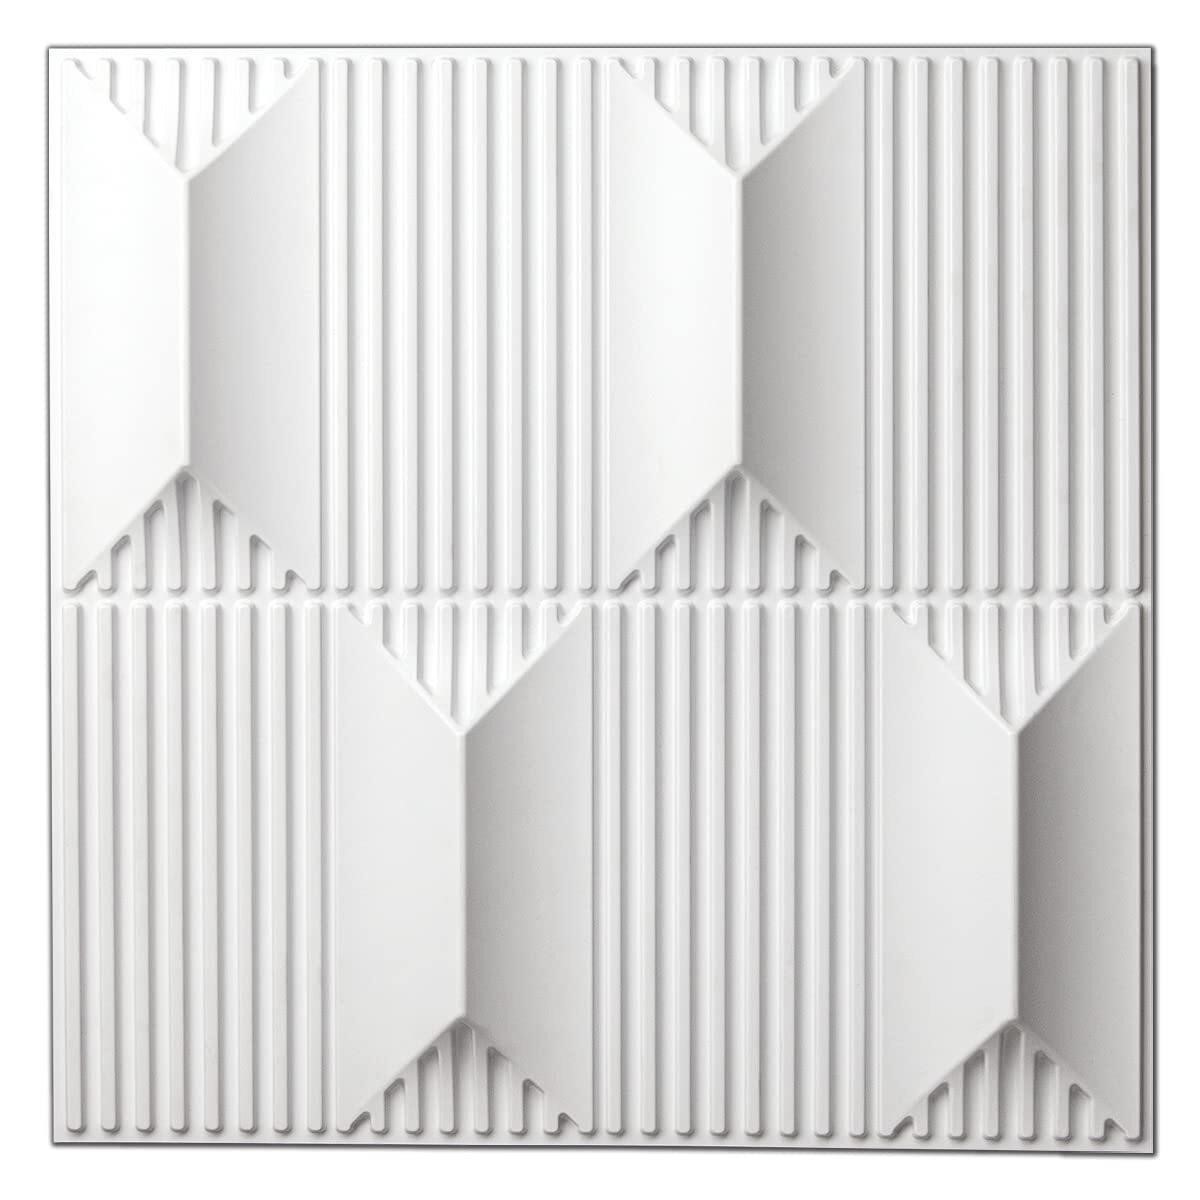 Art3dwallpanels PVC 3D Wall Panel 19.7x19.7.